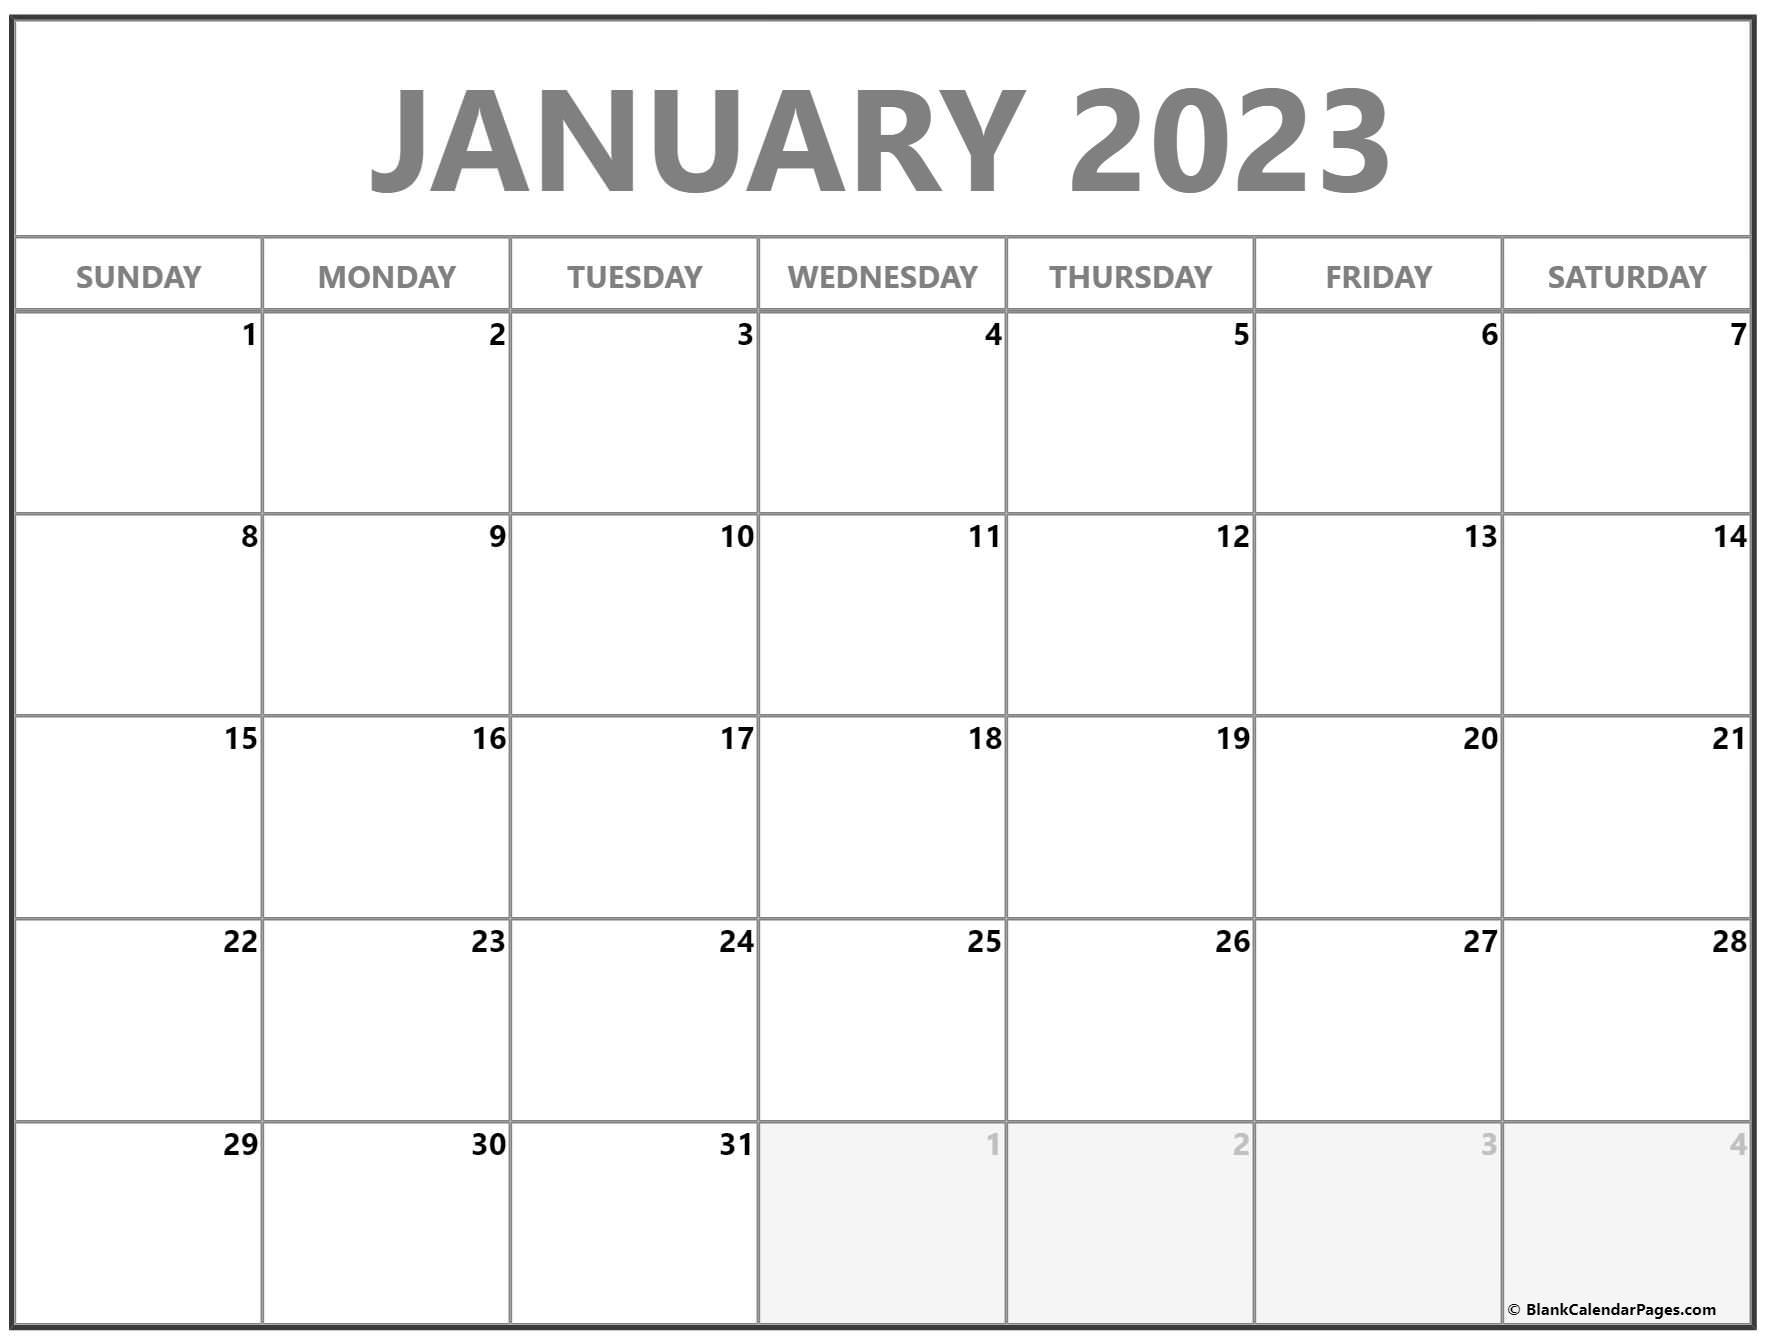 free-blank-monthly-calendar-2023-2023-freeblankcalendar